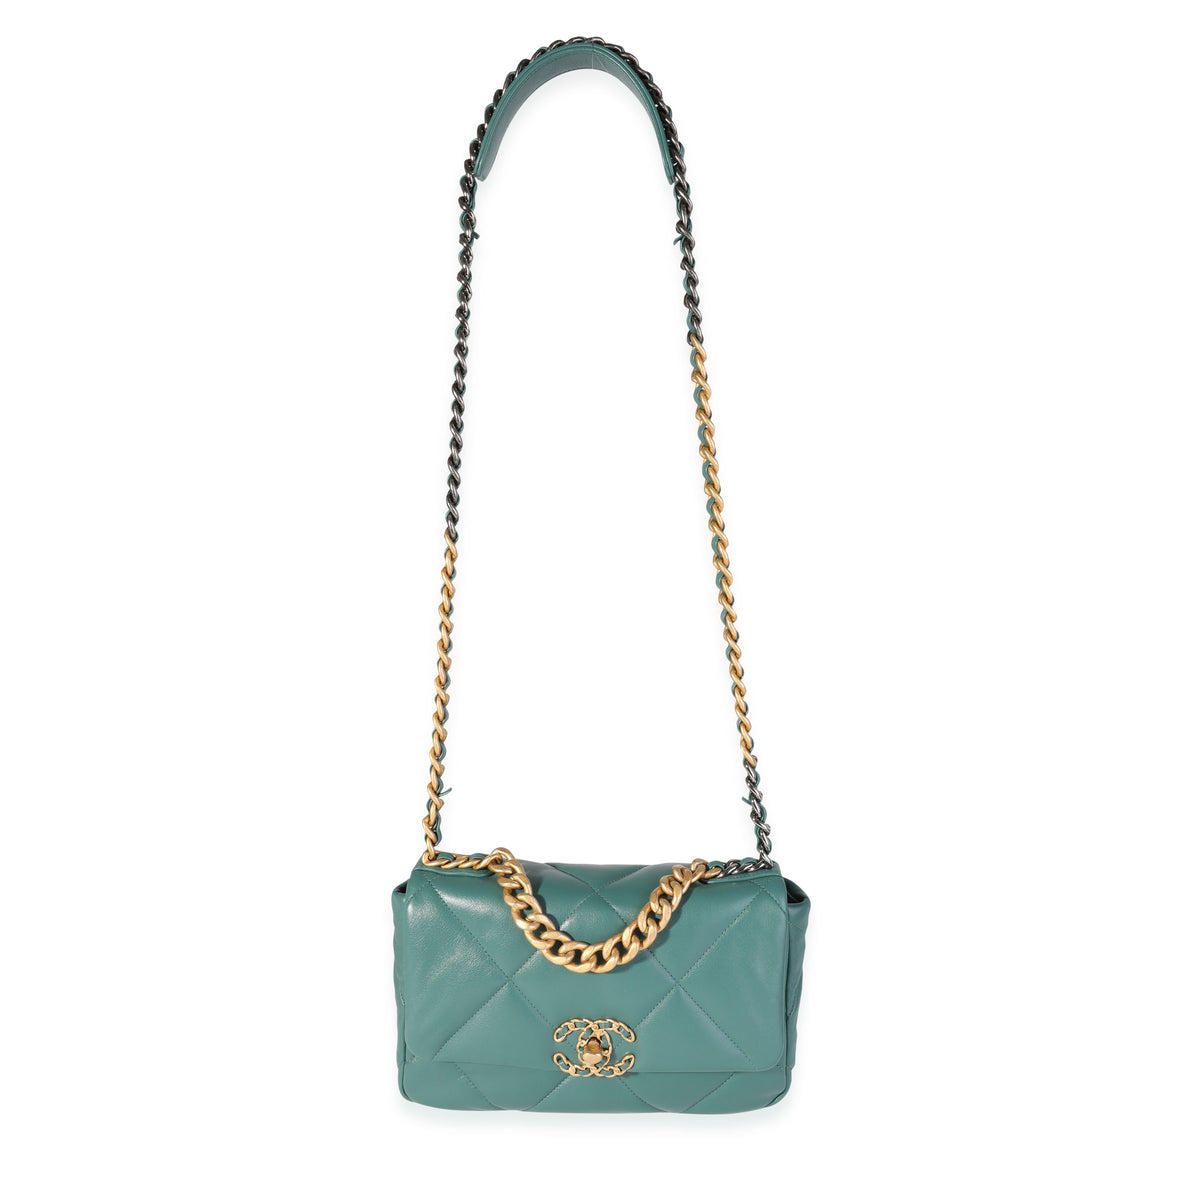 Chanel Teal Green Quilted Lambskin Medium Chanel 19 Flap Bag, myGemma, NL